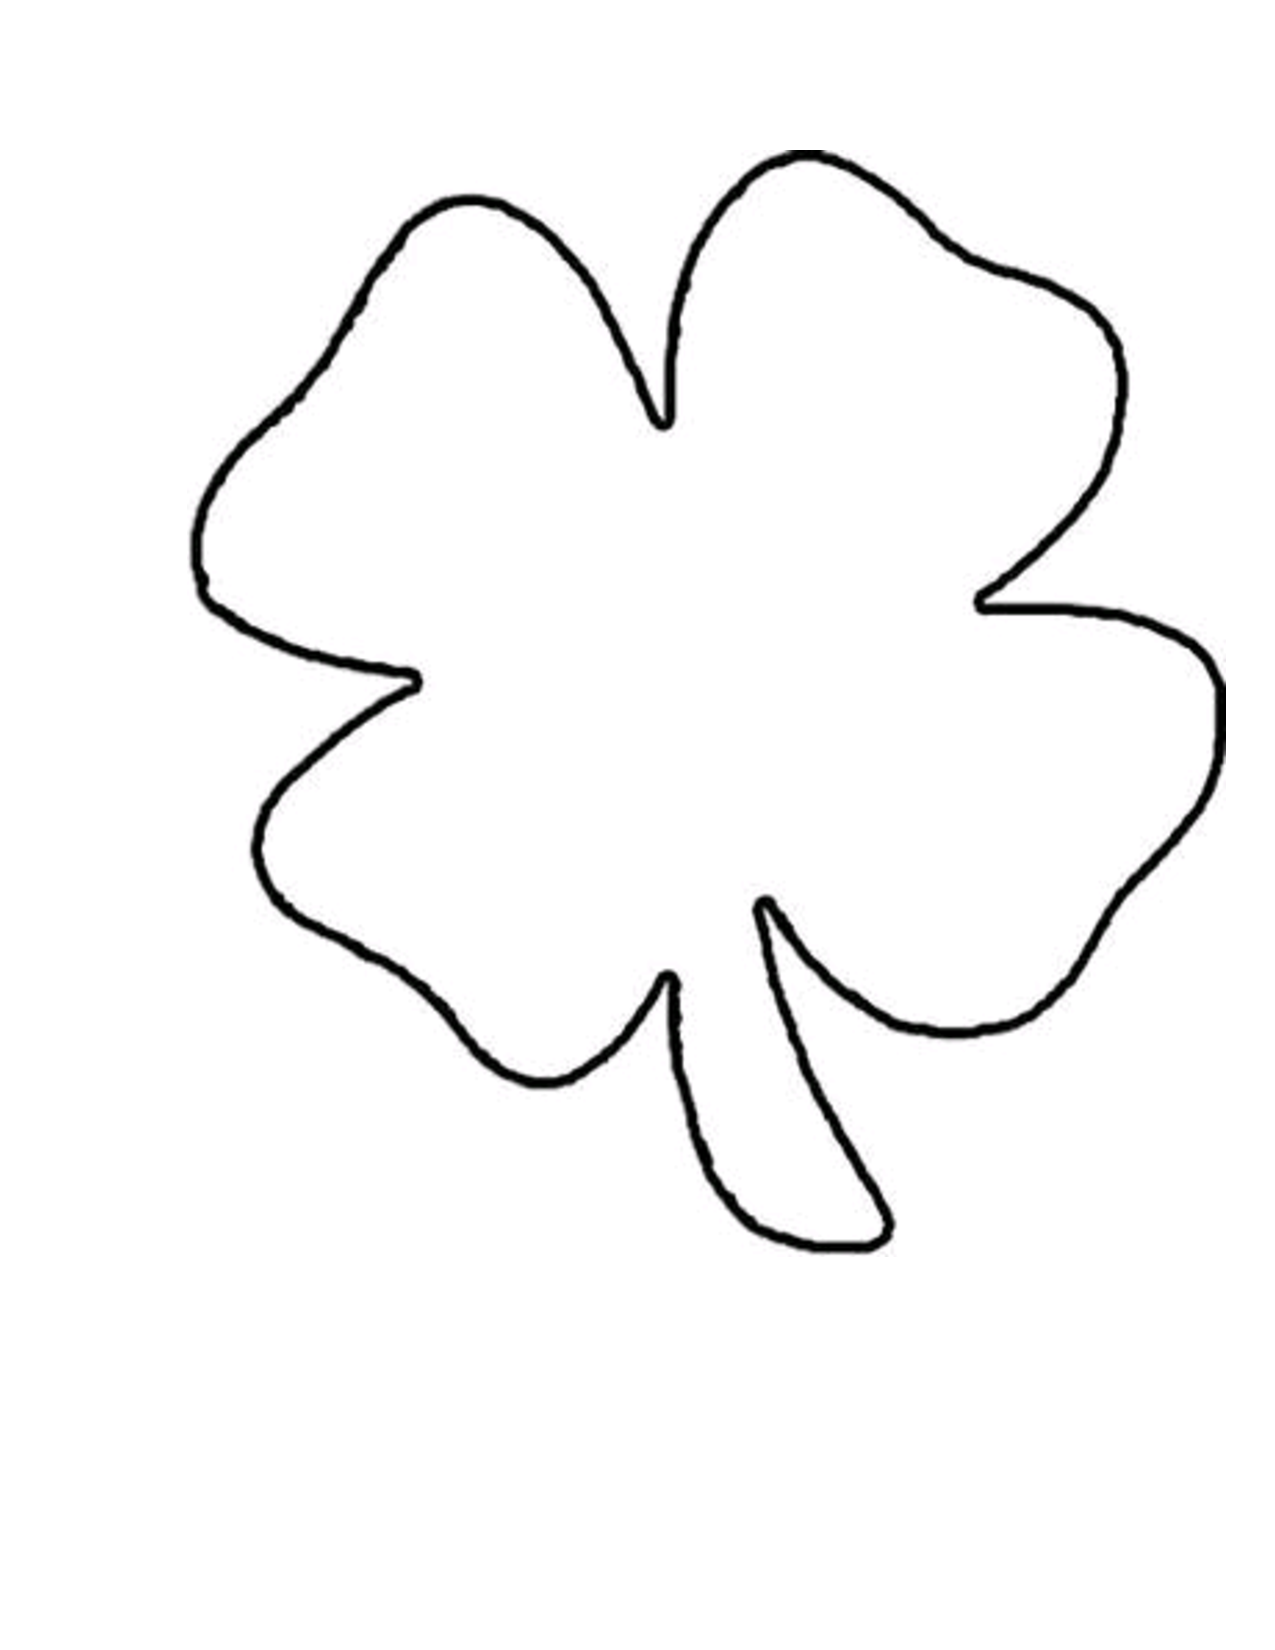 Free Four Leaf Clover Outline, Download Free Clip Art, Free Clip Art on